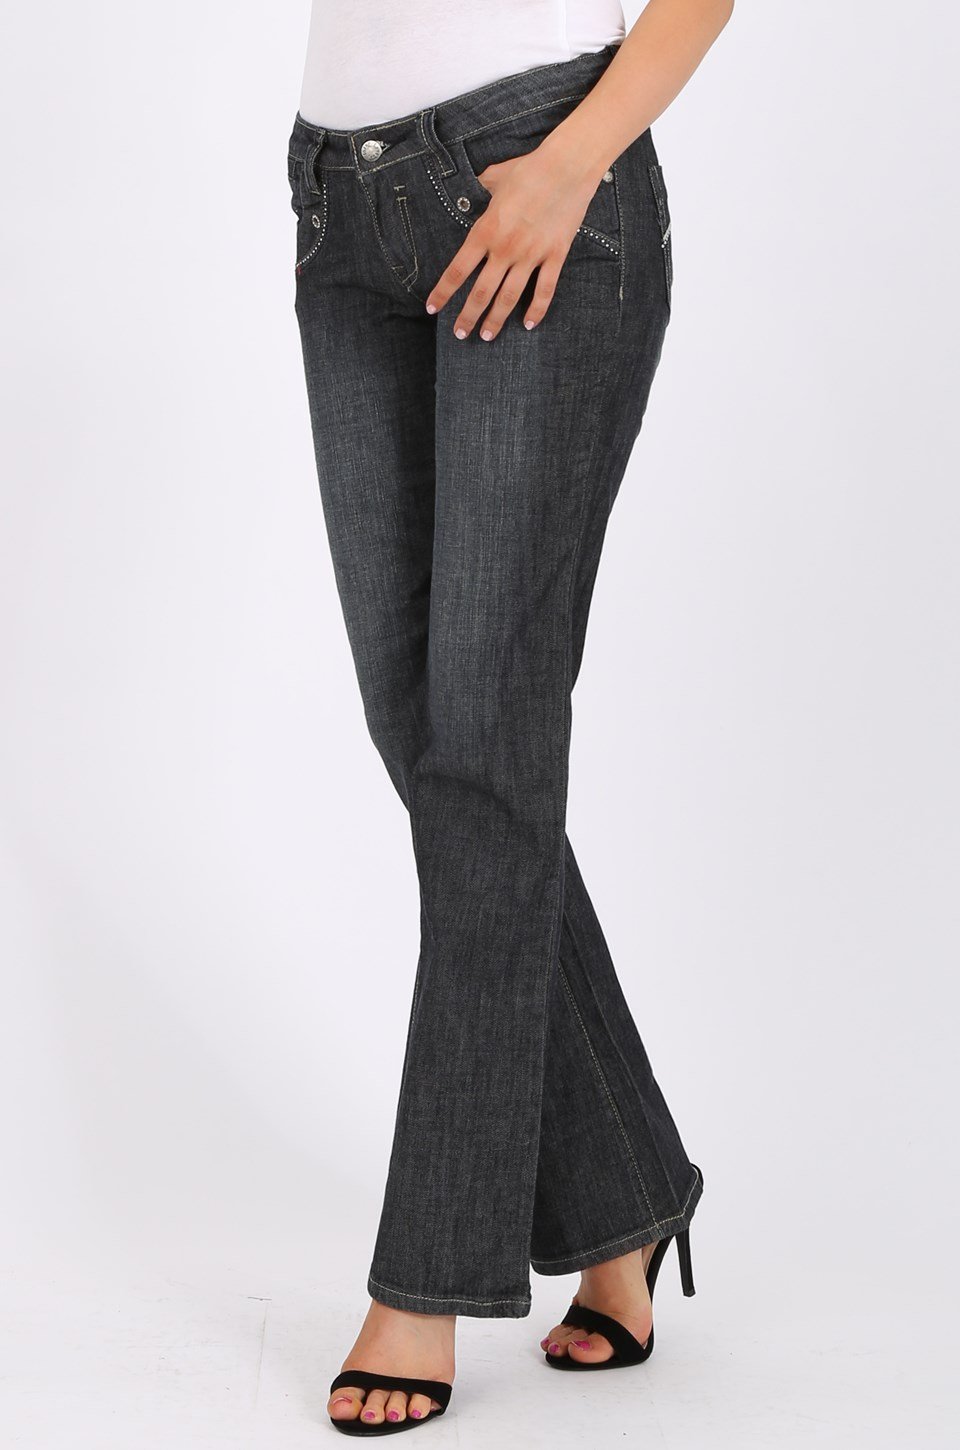 MISS PINKI Rebecca bootlegs Jeans in black